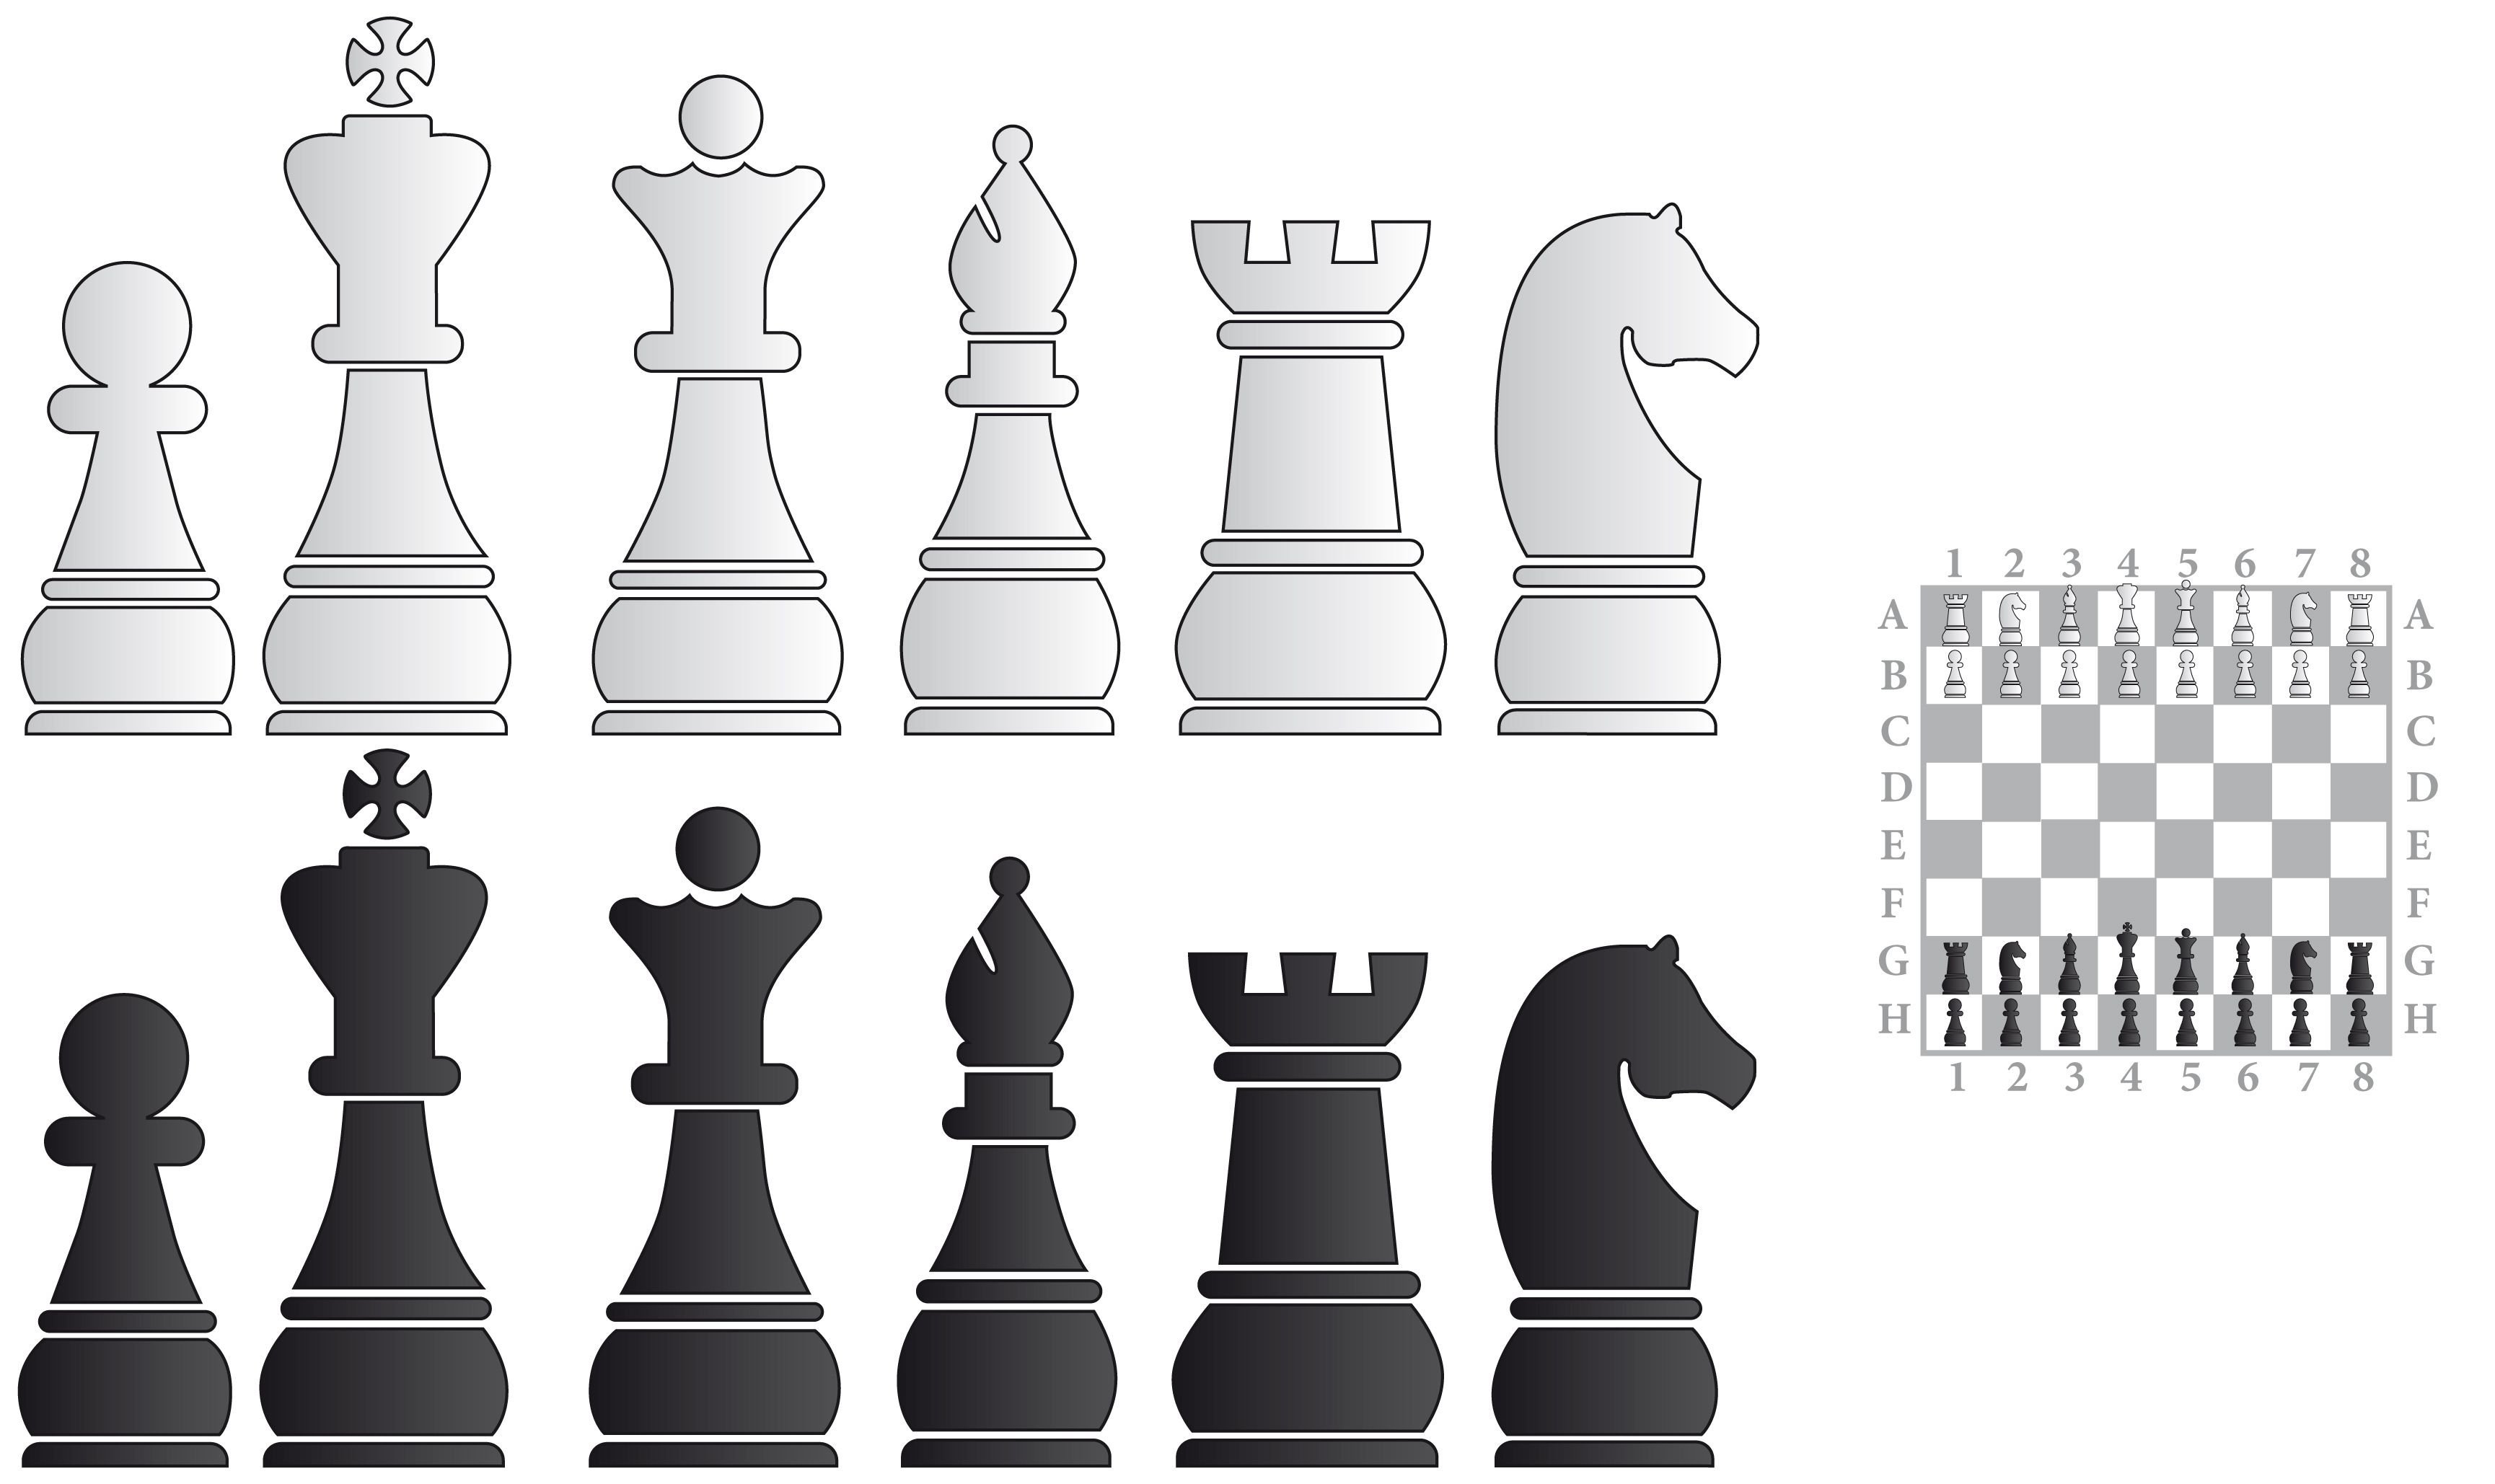 Виды шахмат. Ладья шахматы референс. Шахматные фигуры для печати. Фигурки шахмат для печати. Шахматные фигурки для печати.